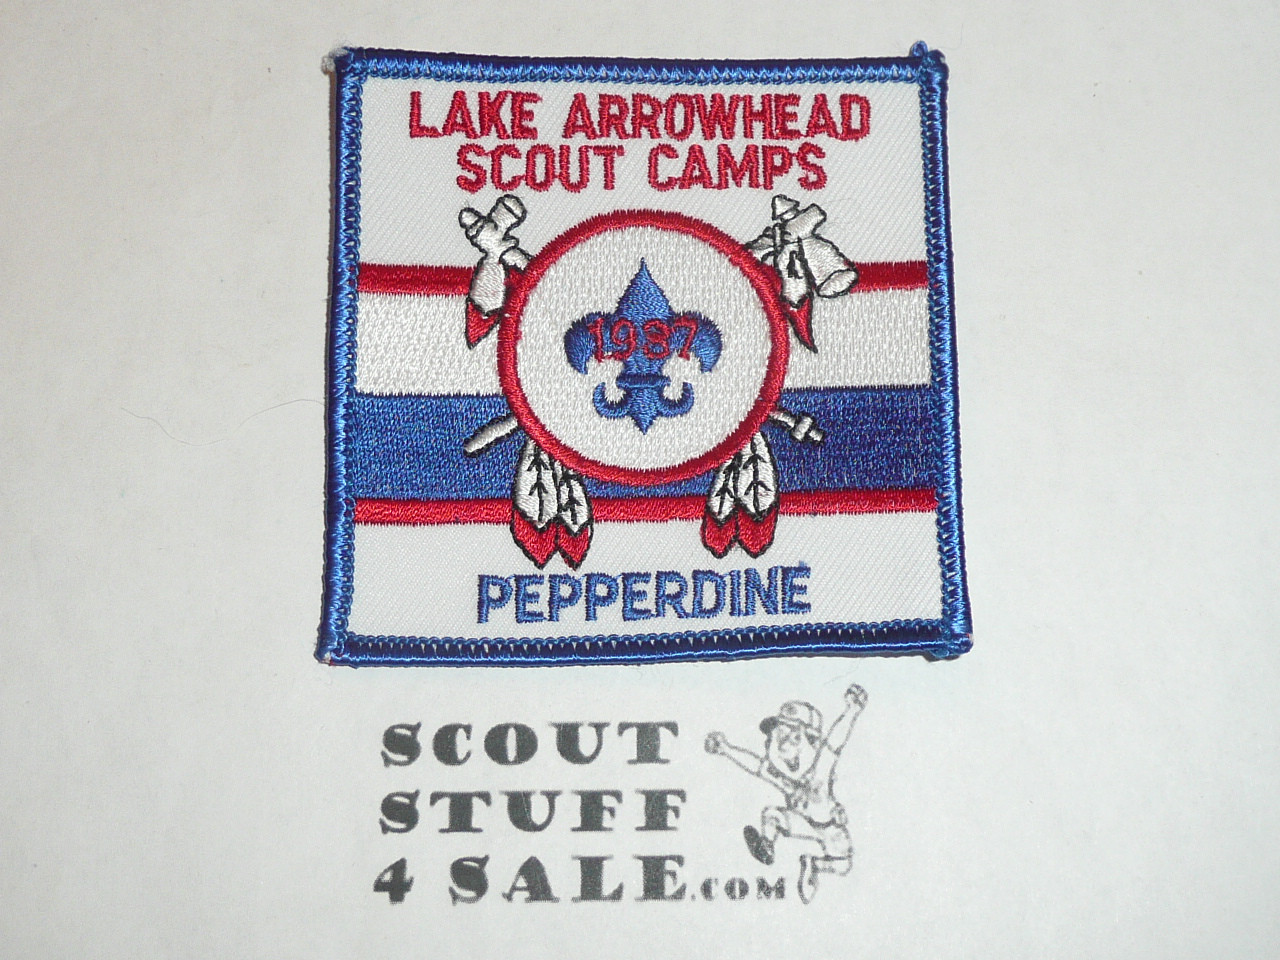 Lake Arrowhead Scout Camps, Camp Pepperdine Patch, 1987